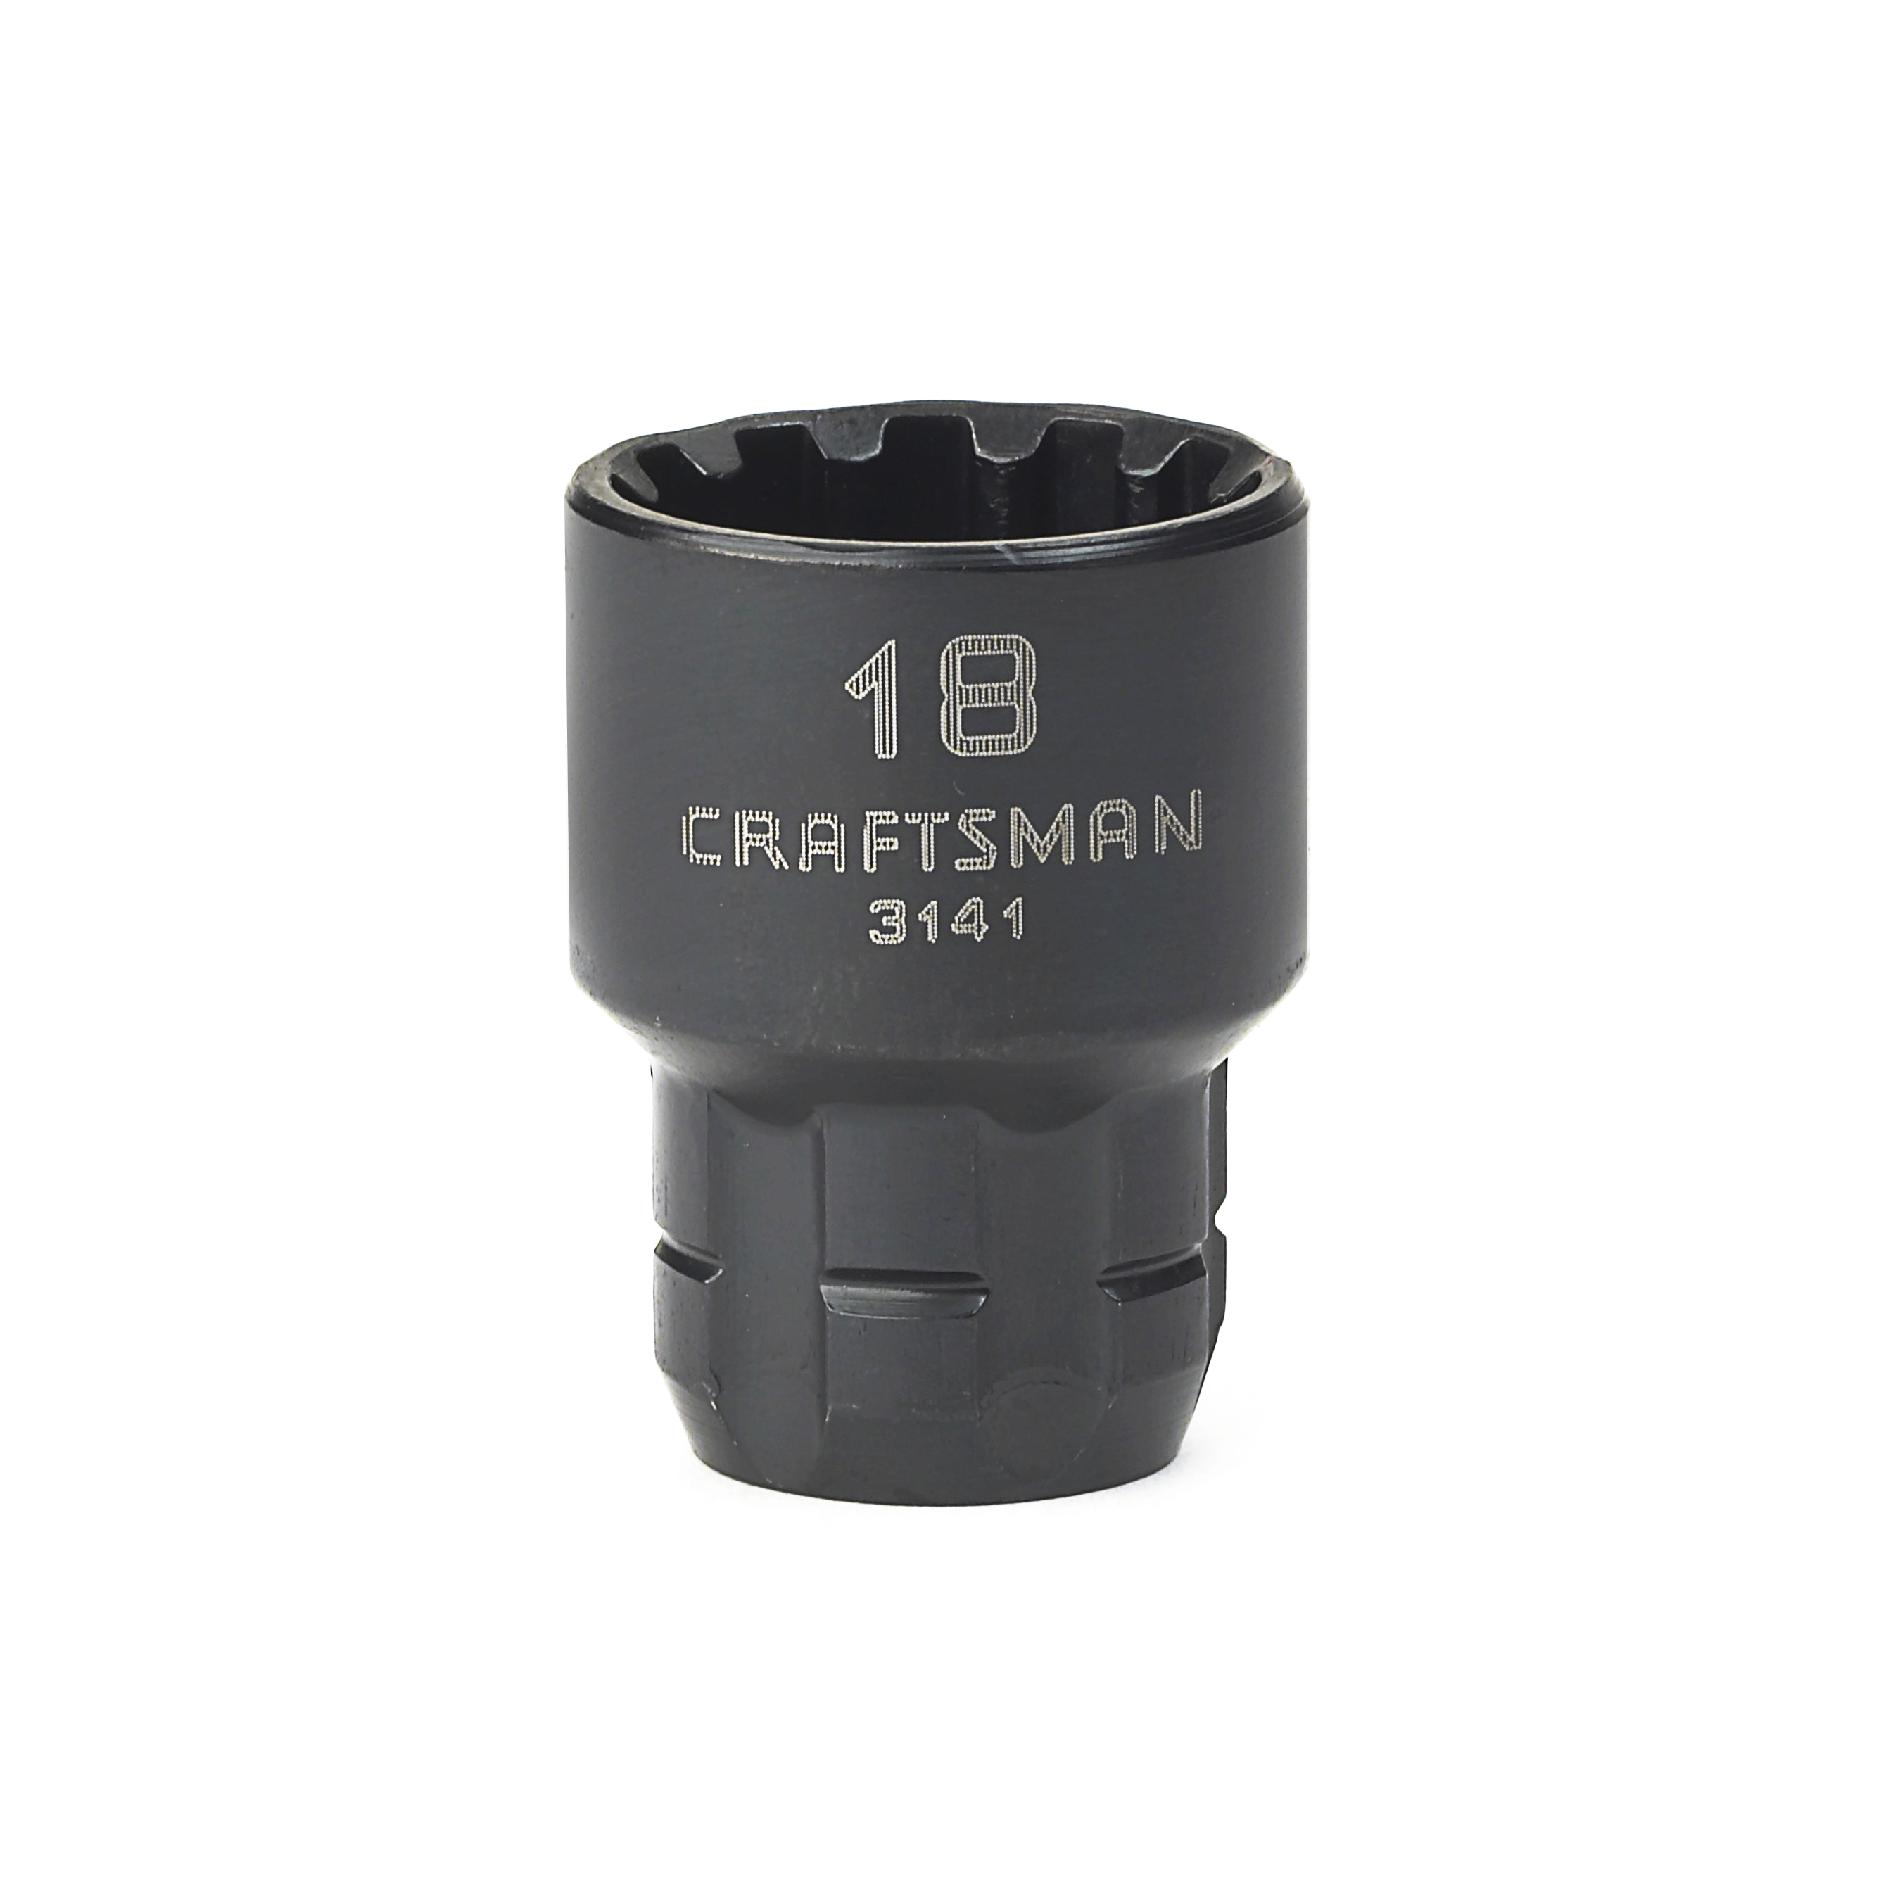 Craftsman 18 mm Universal Max Axess Sockets, 3/8-Inch Drive